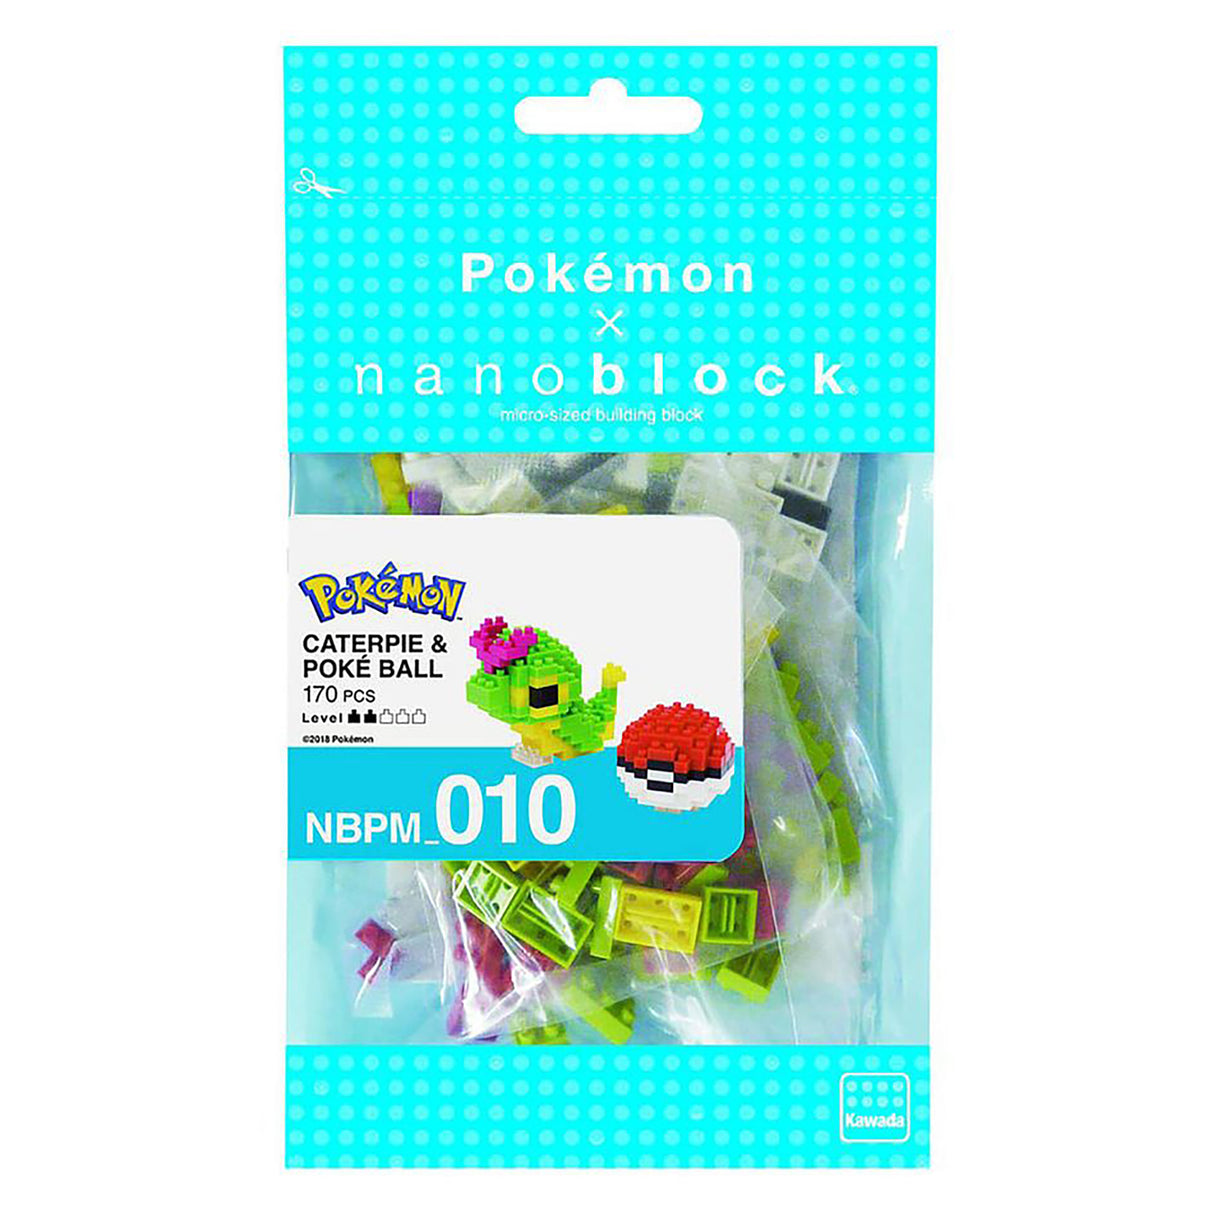 nanoblock Pokemon - Caterpie & Poke Ball (170 pieces)